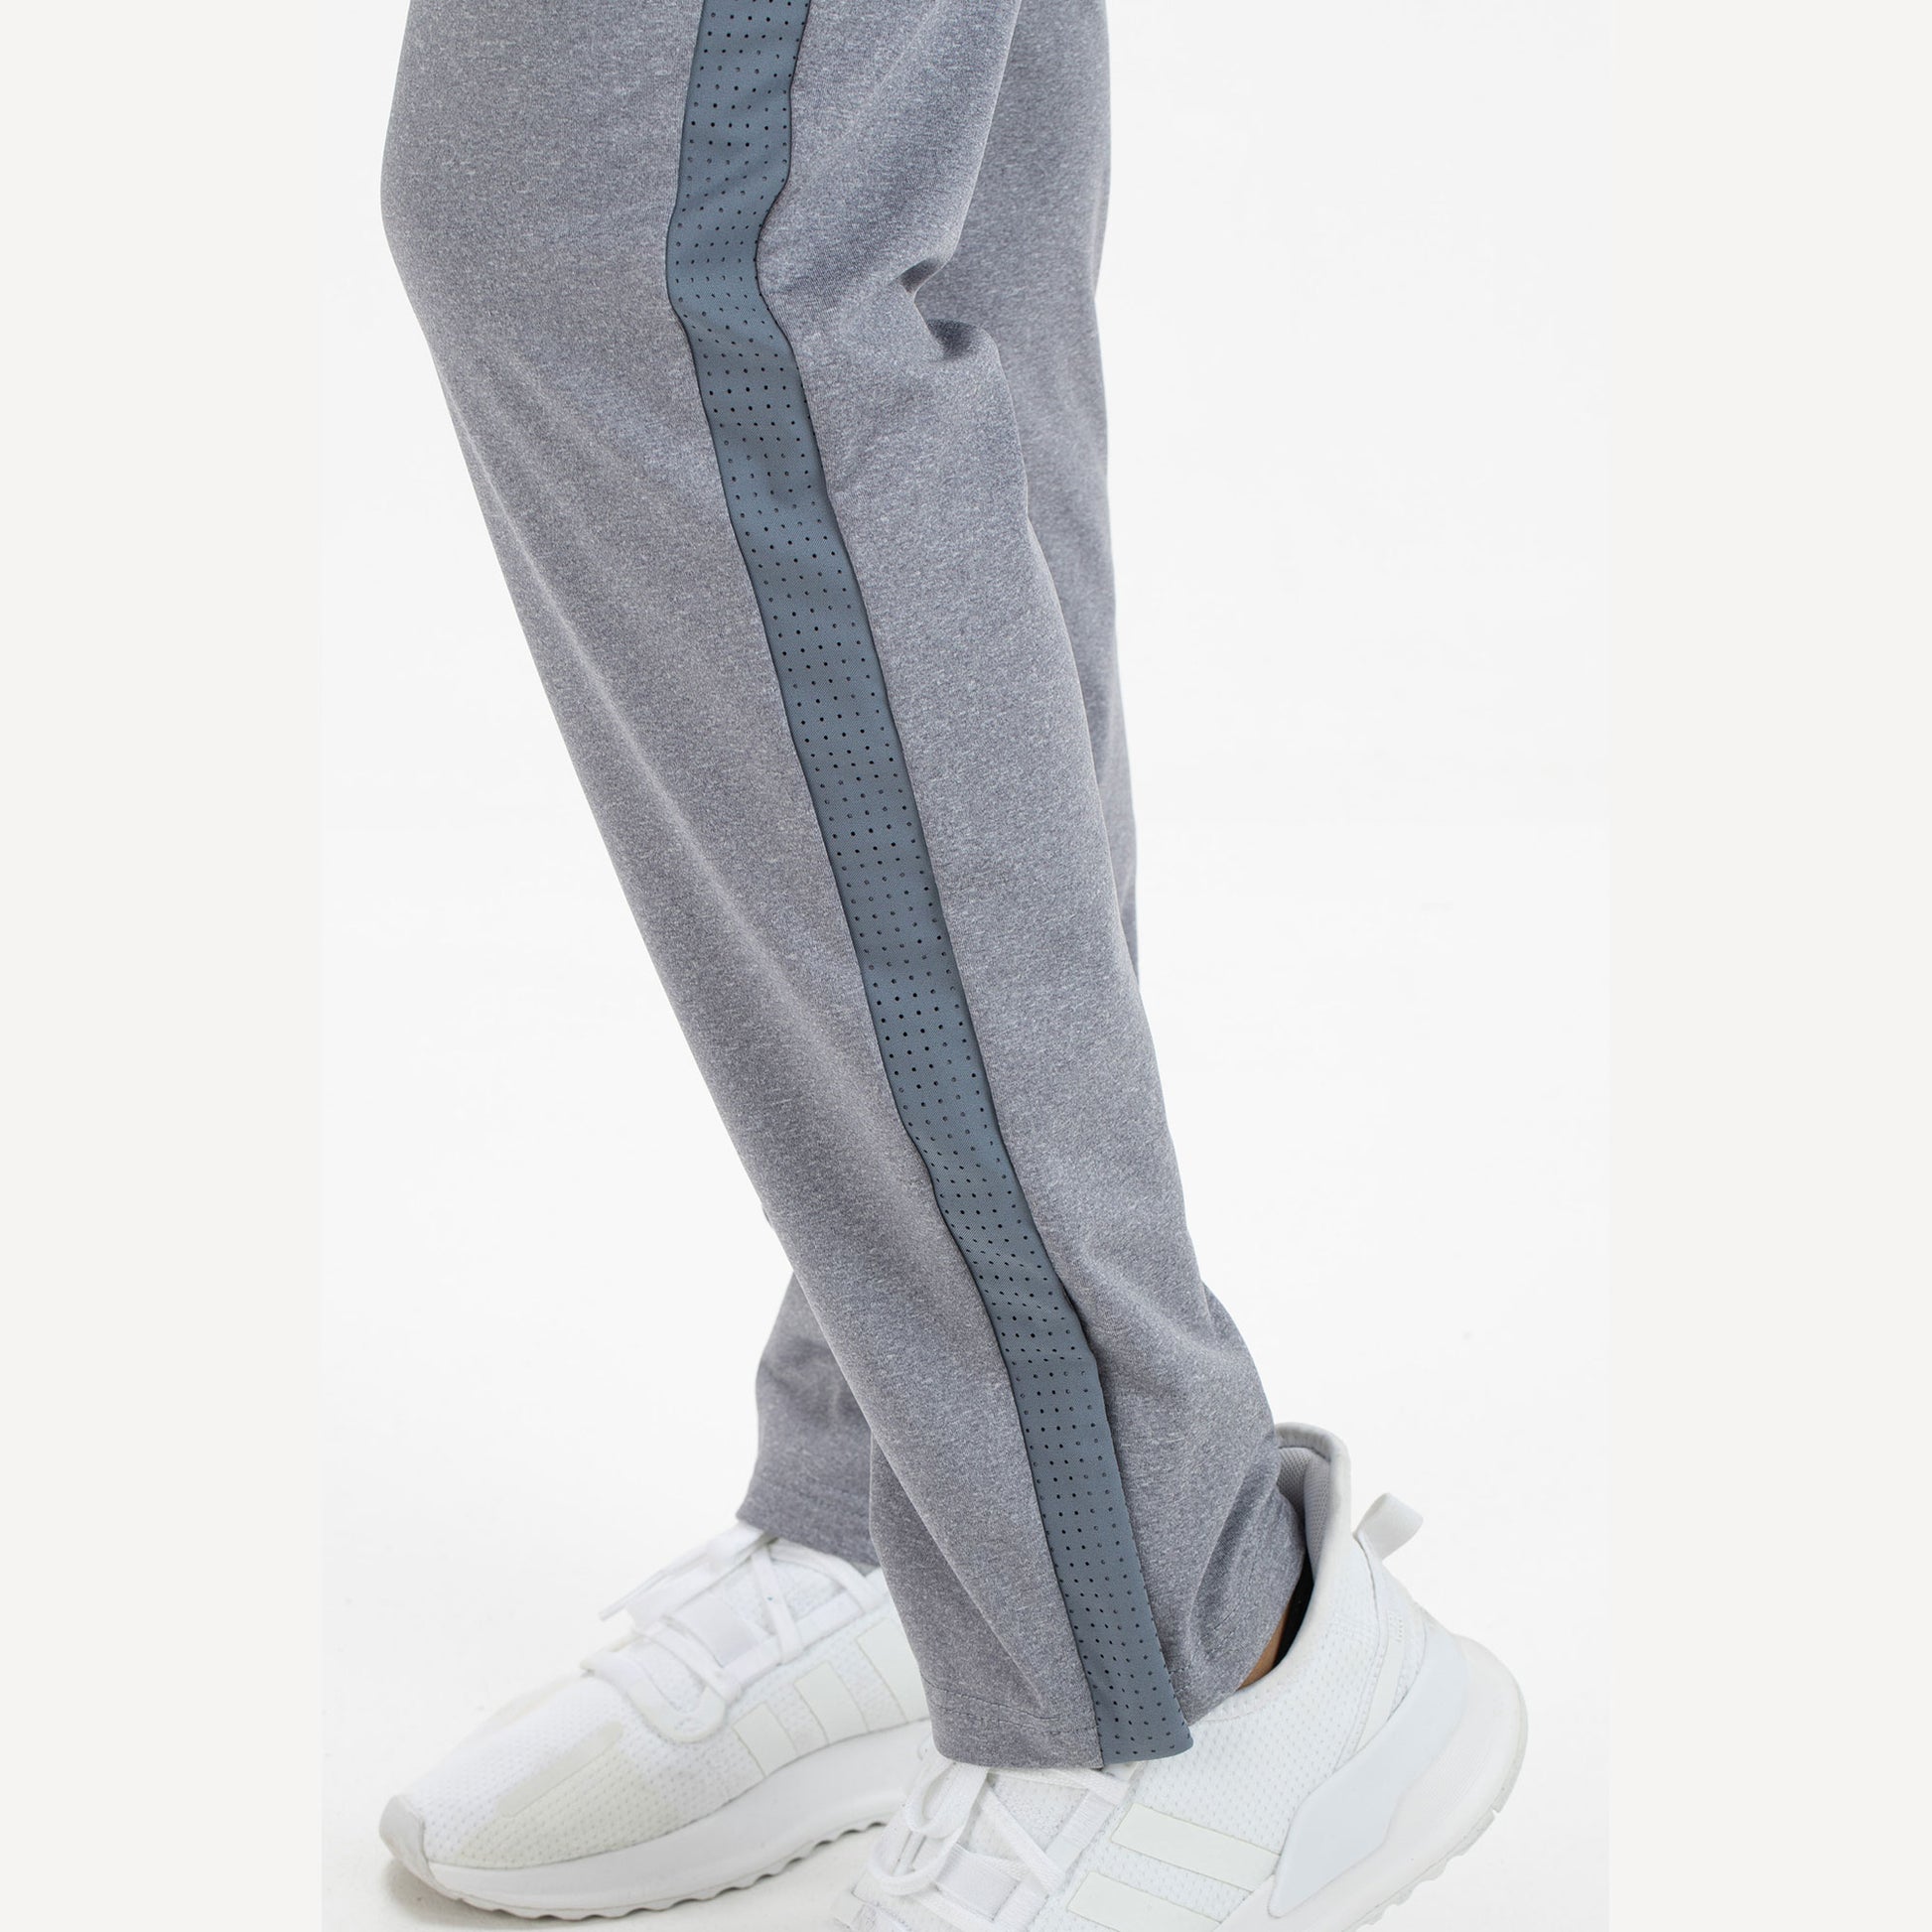 Sjeng Sports Gila Women's Tennis Pants Grey (4)